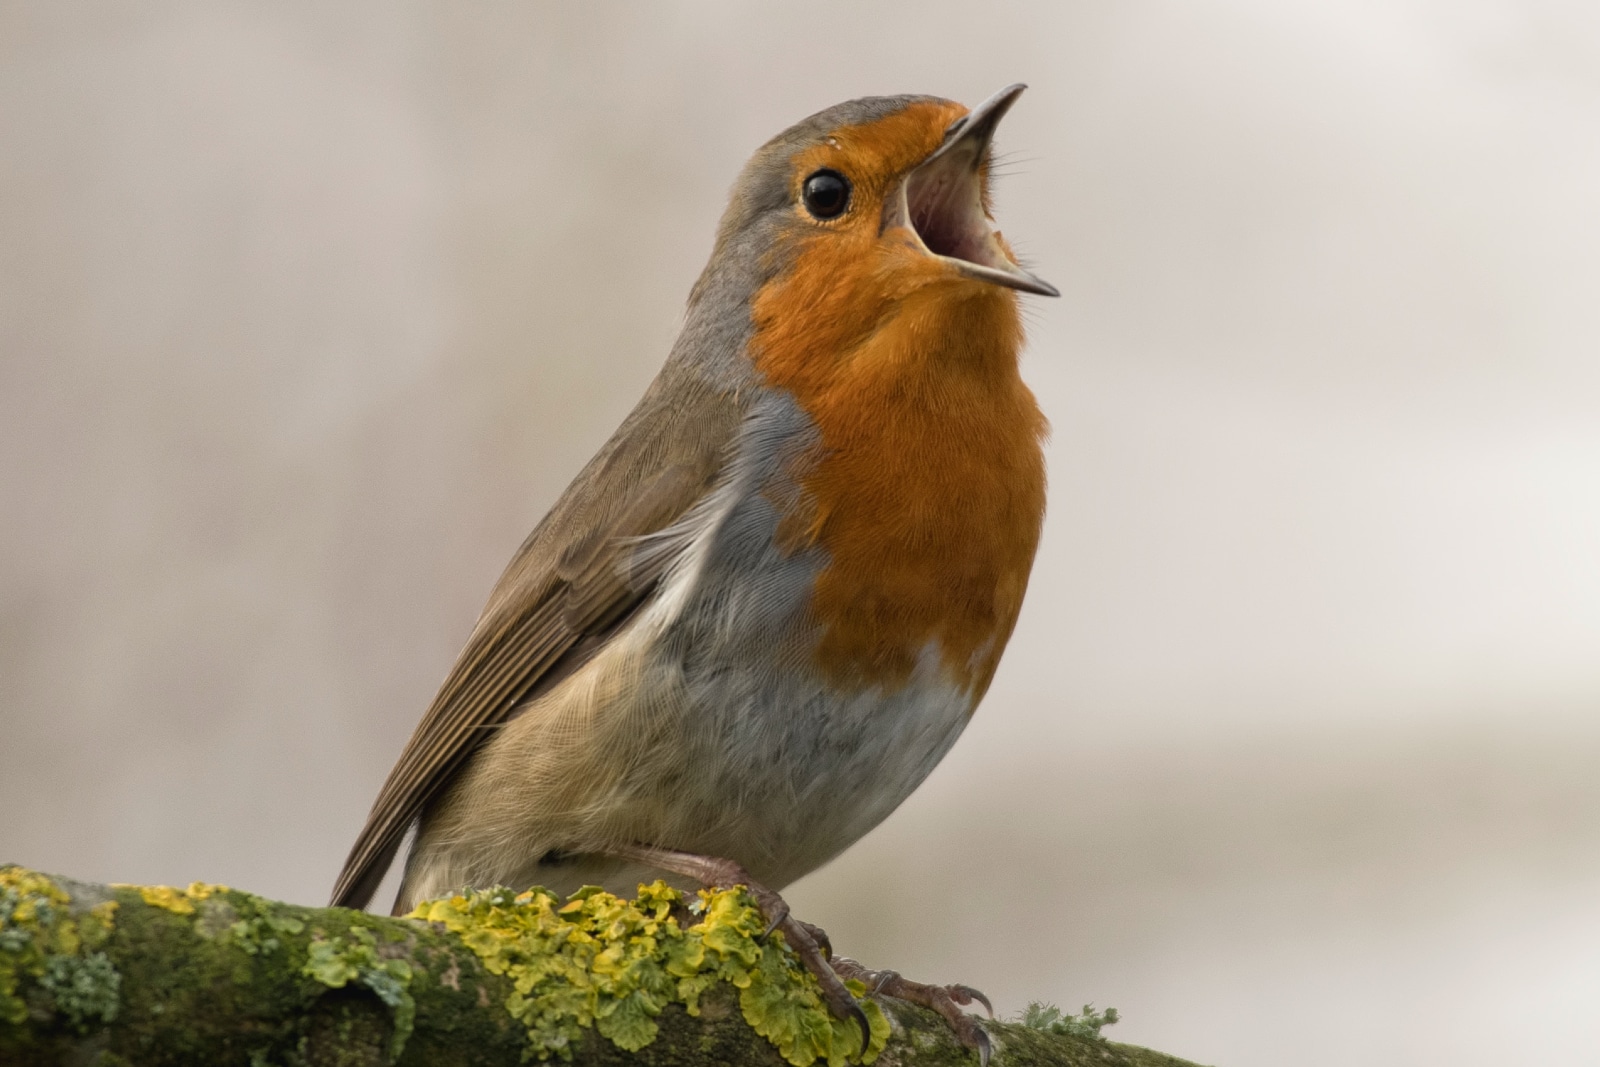 A robin sitting on a branch